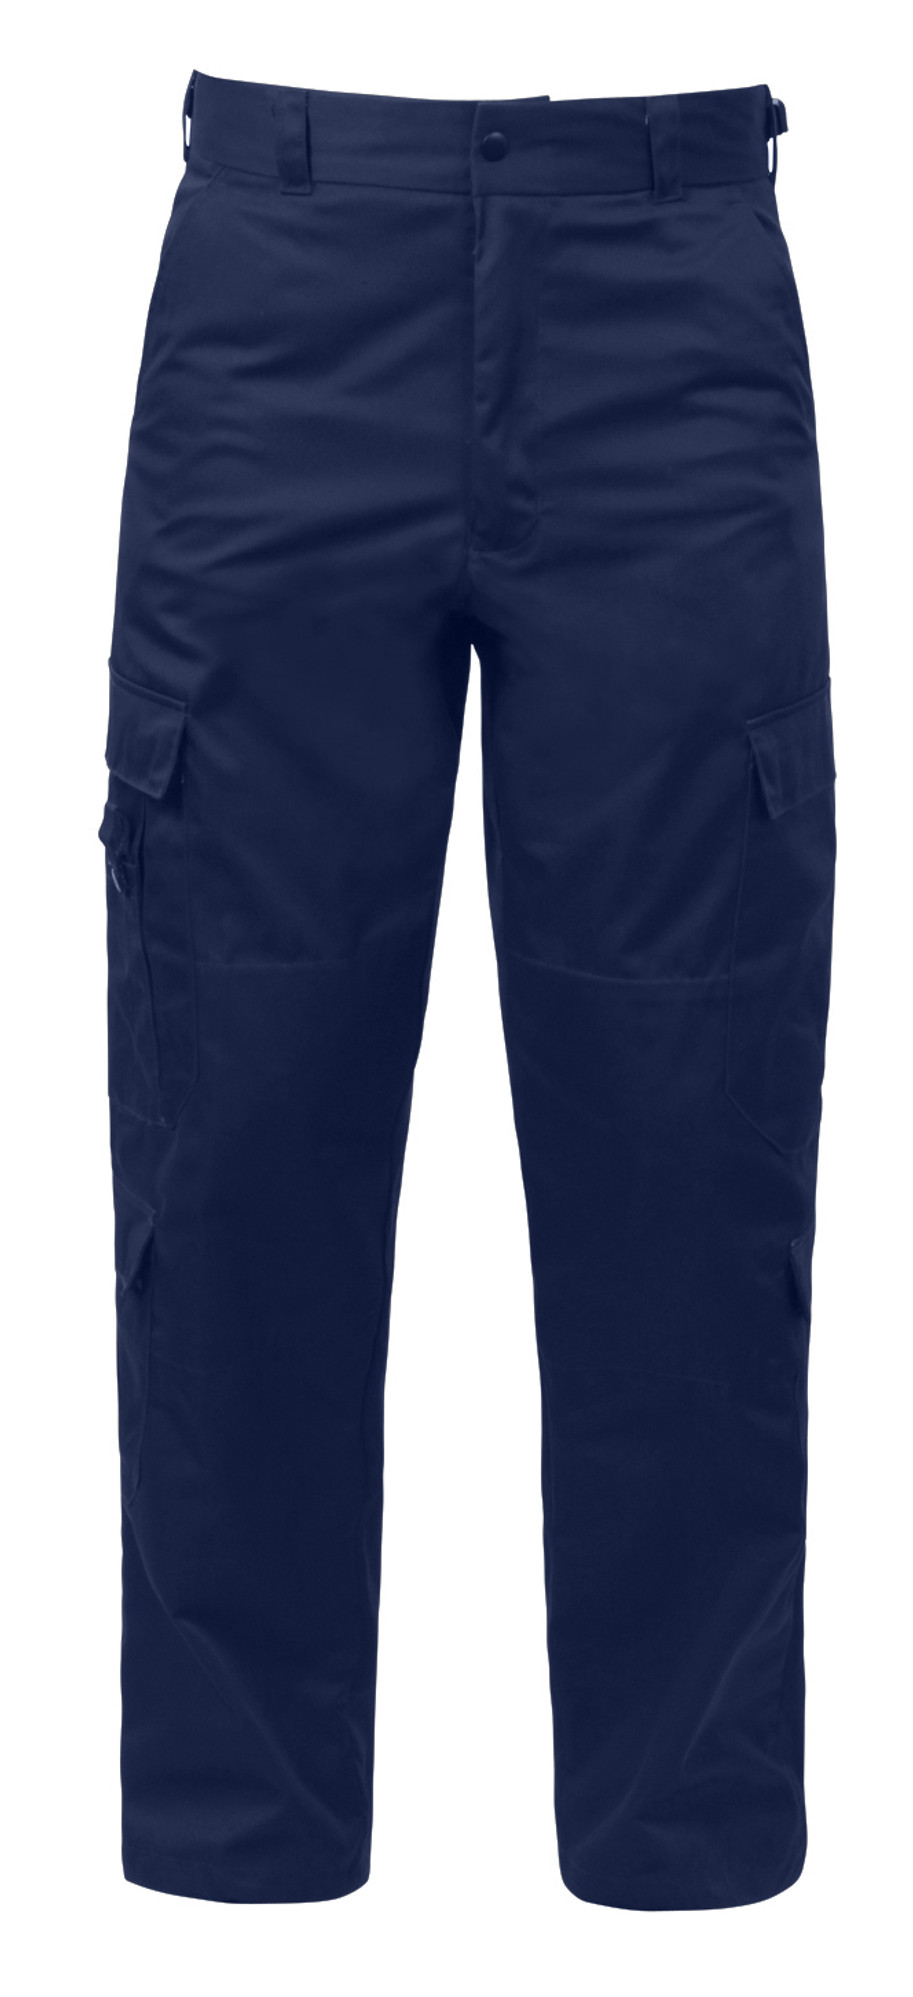 Rothco EMT Pants - Navy Blue